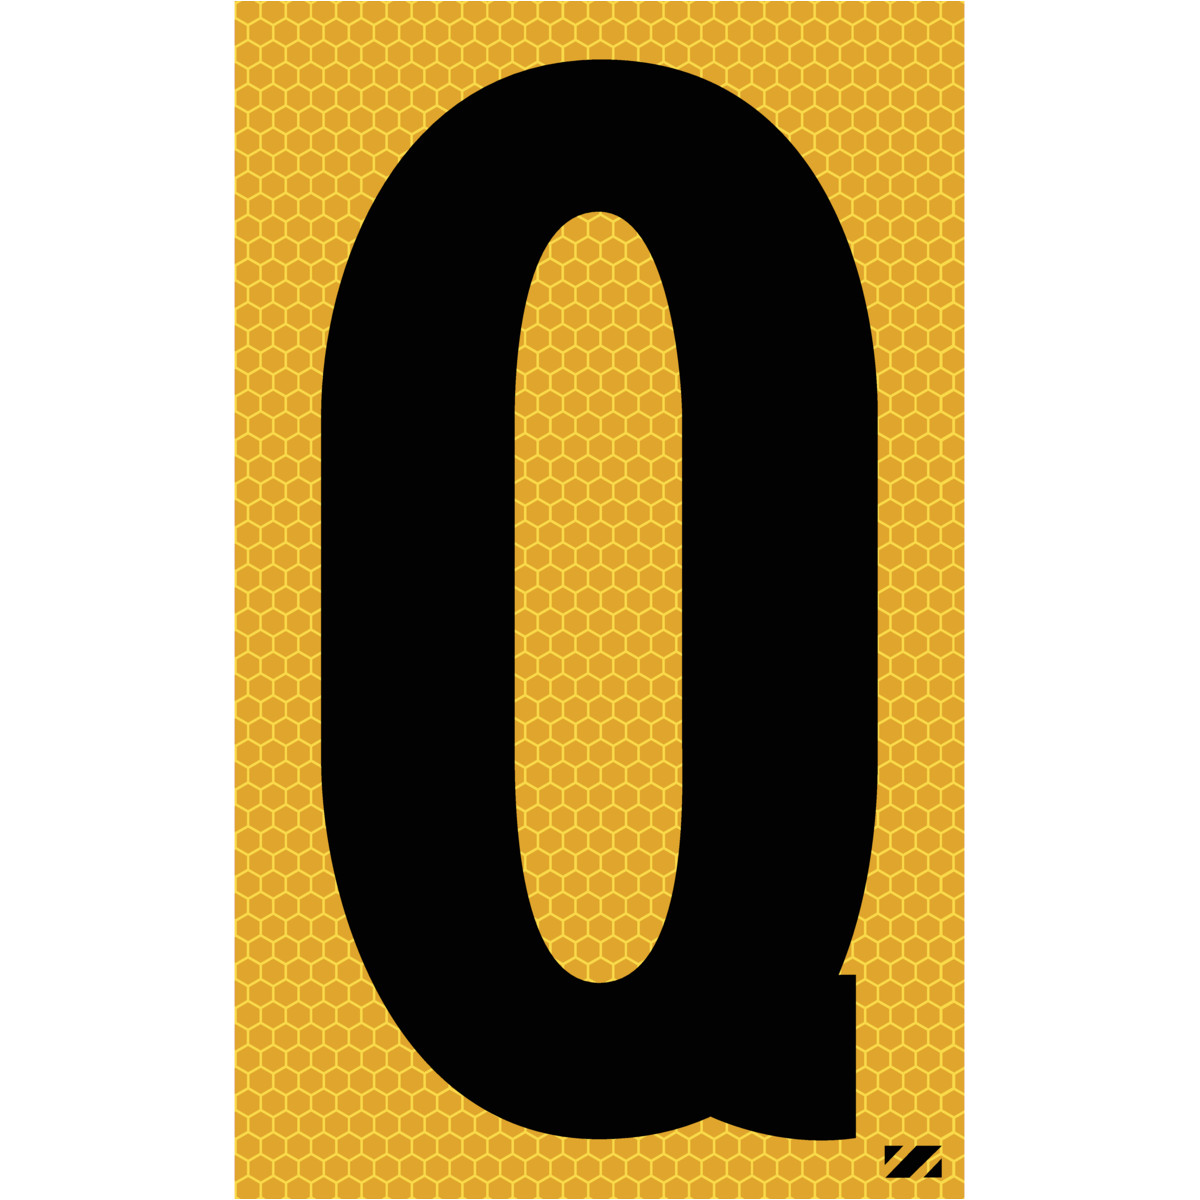 2.5" Black on Yellow SunBright® Reflective "Q"